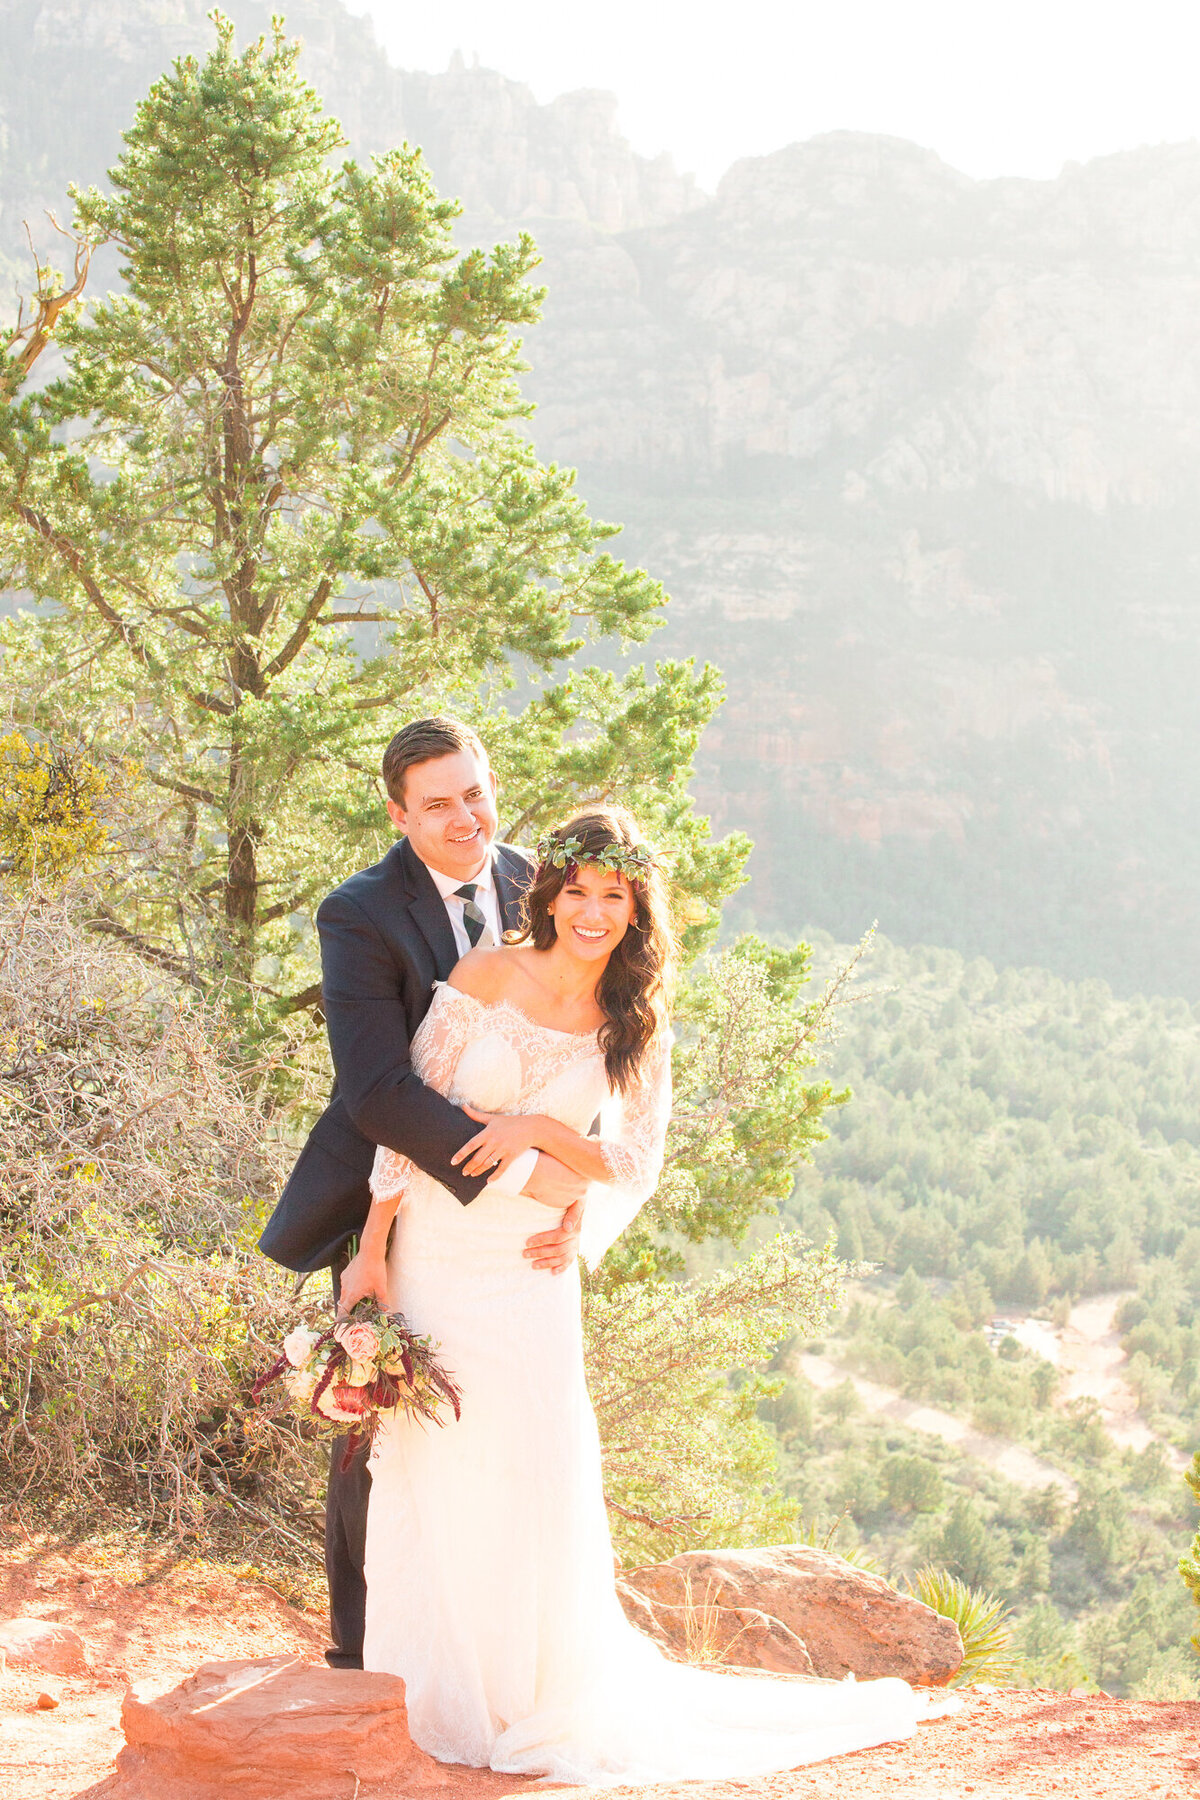 Bridal Portrait Photography - Sedona, Arizona - Bayley Jordan Photography